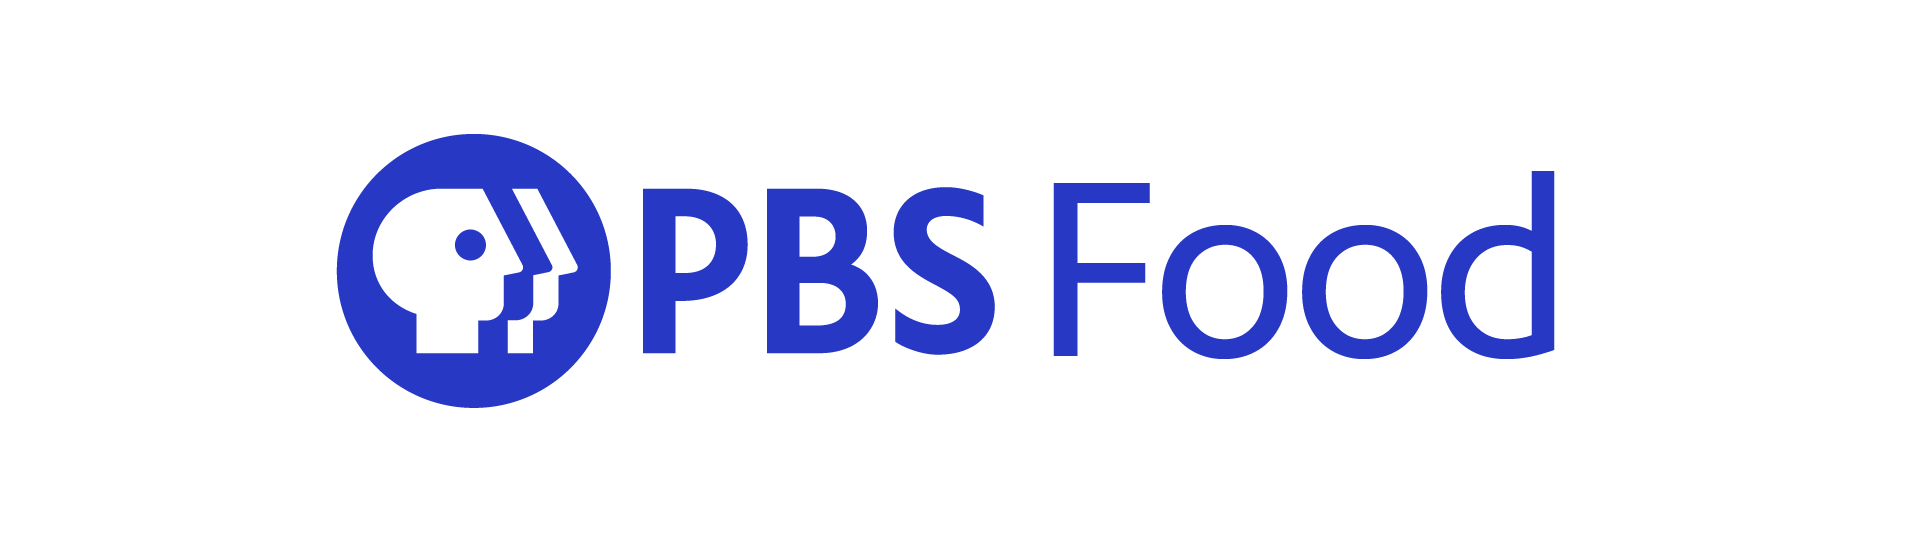 PBS Food logo